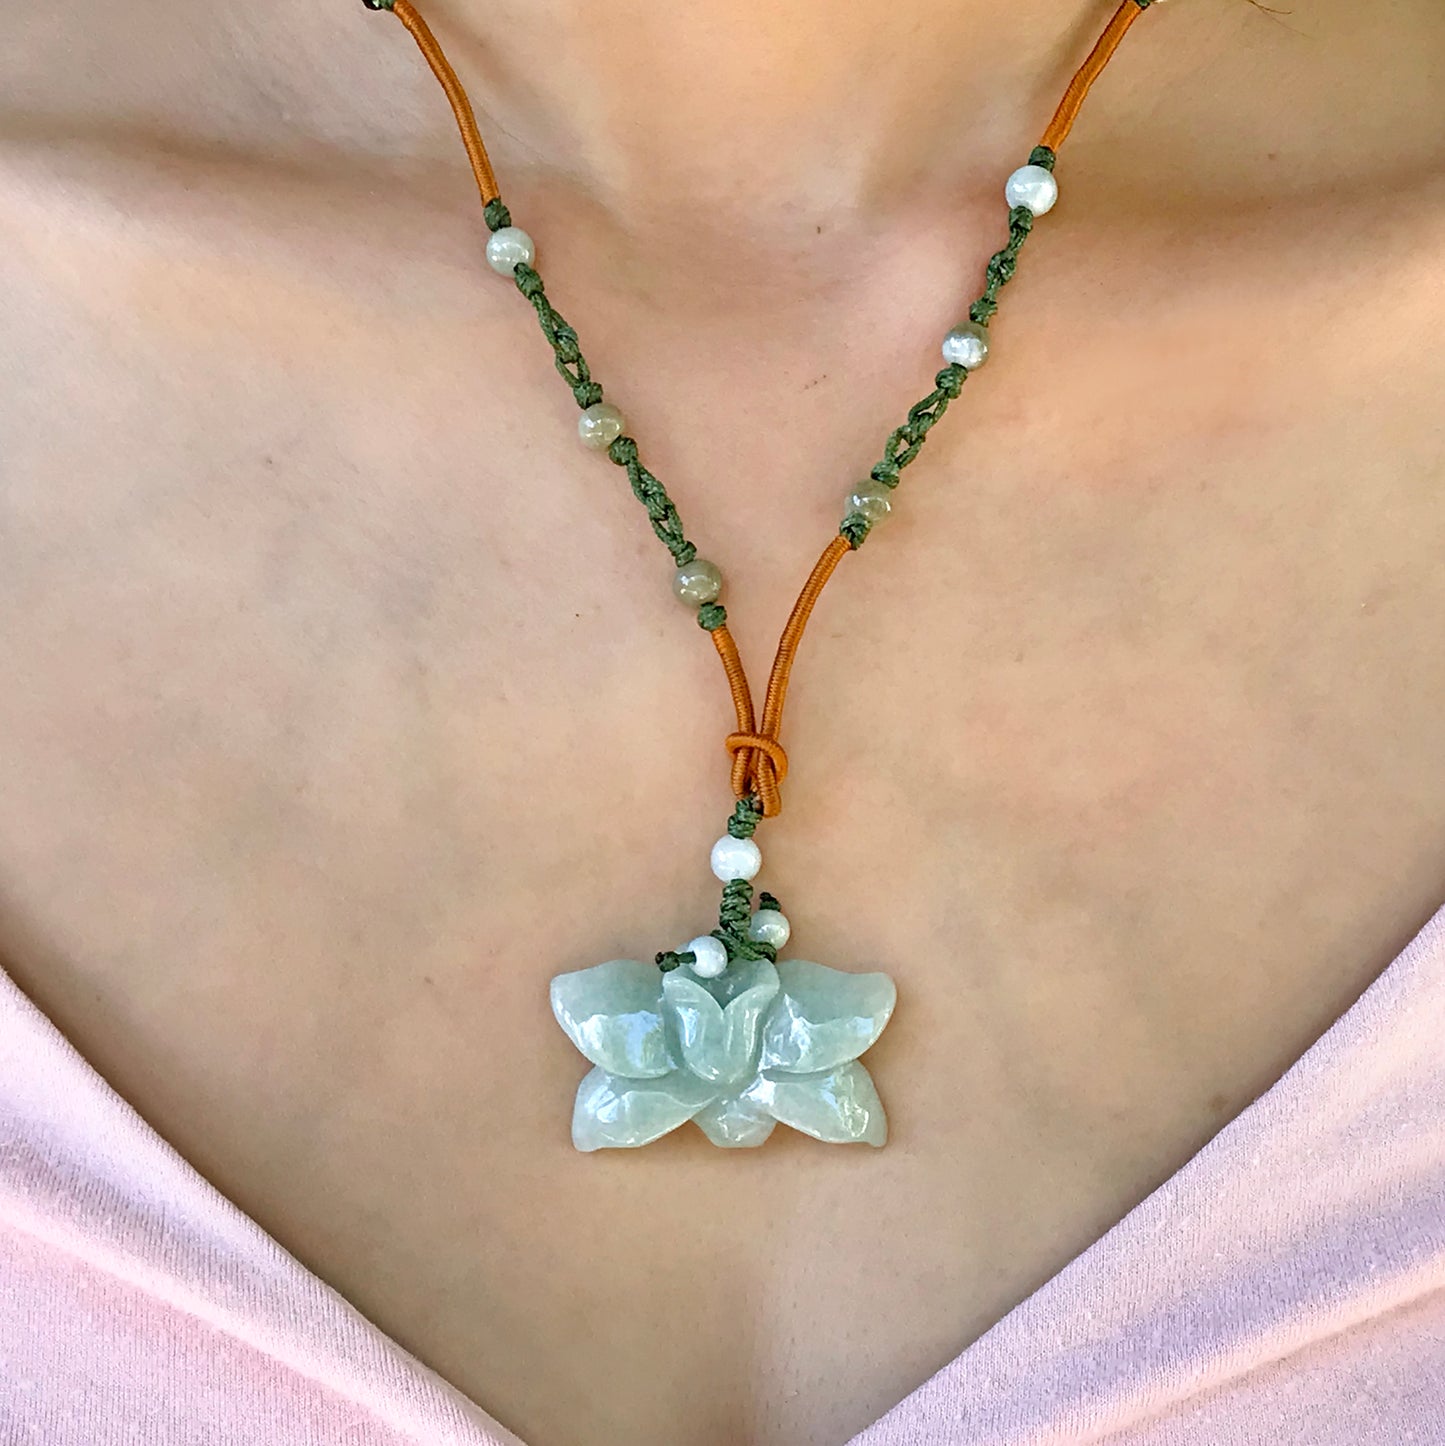 Elegantly Accessorized Wild Indigo Flower Handmade Jade Necklace made with Lime Cord